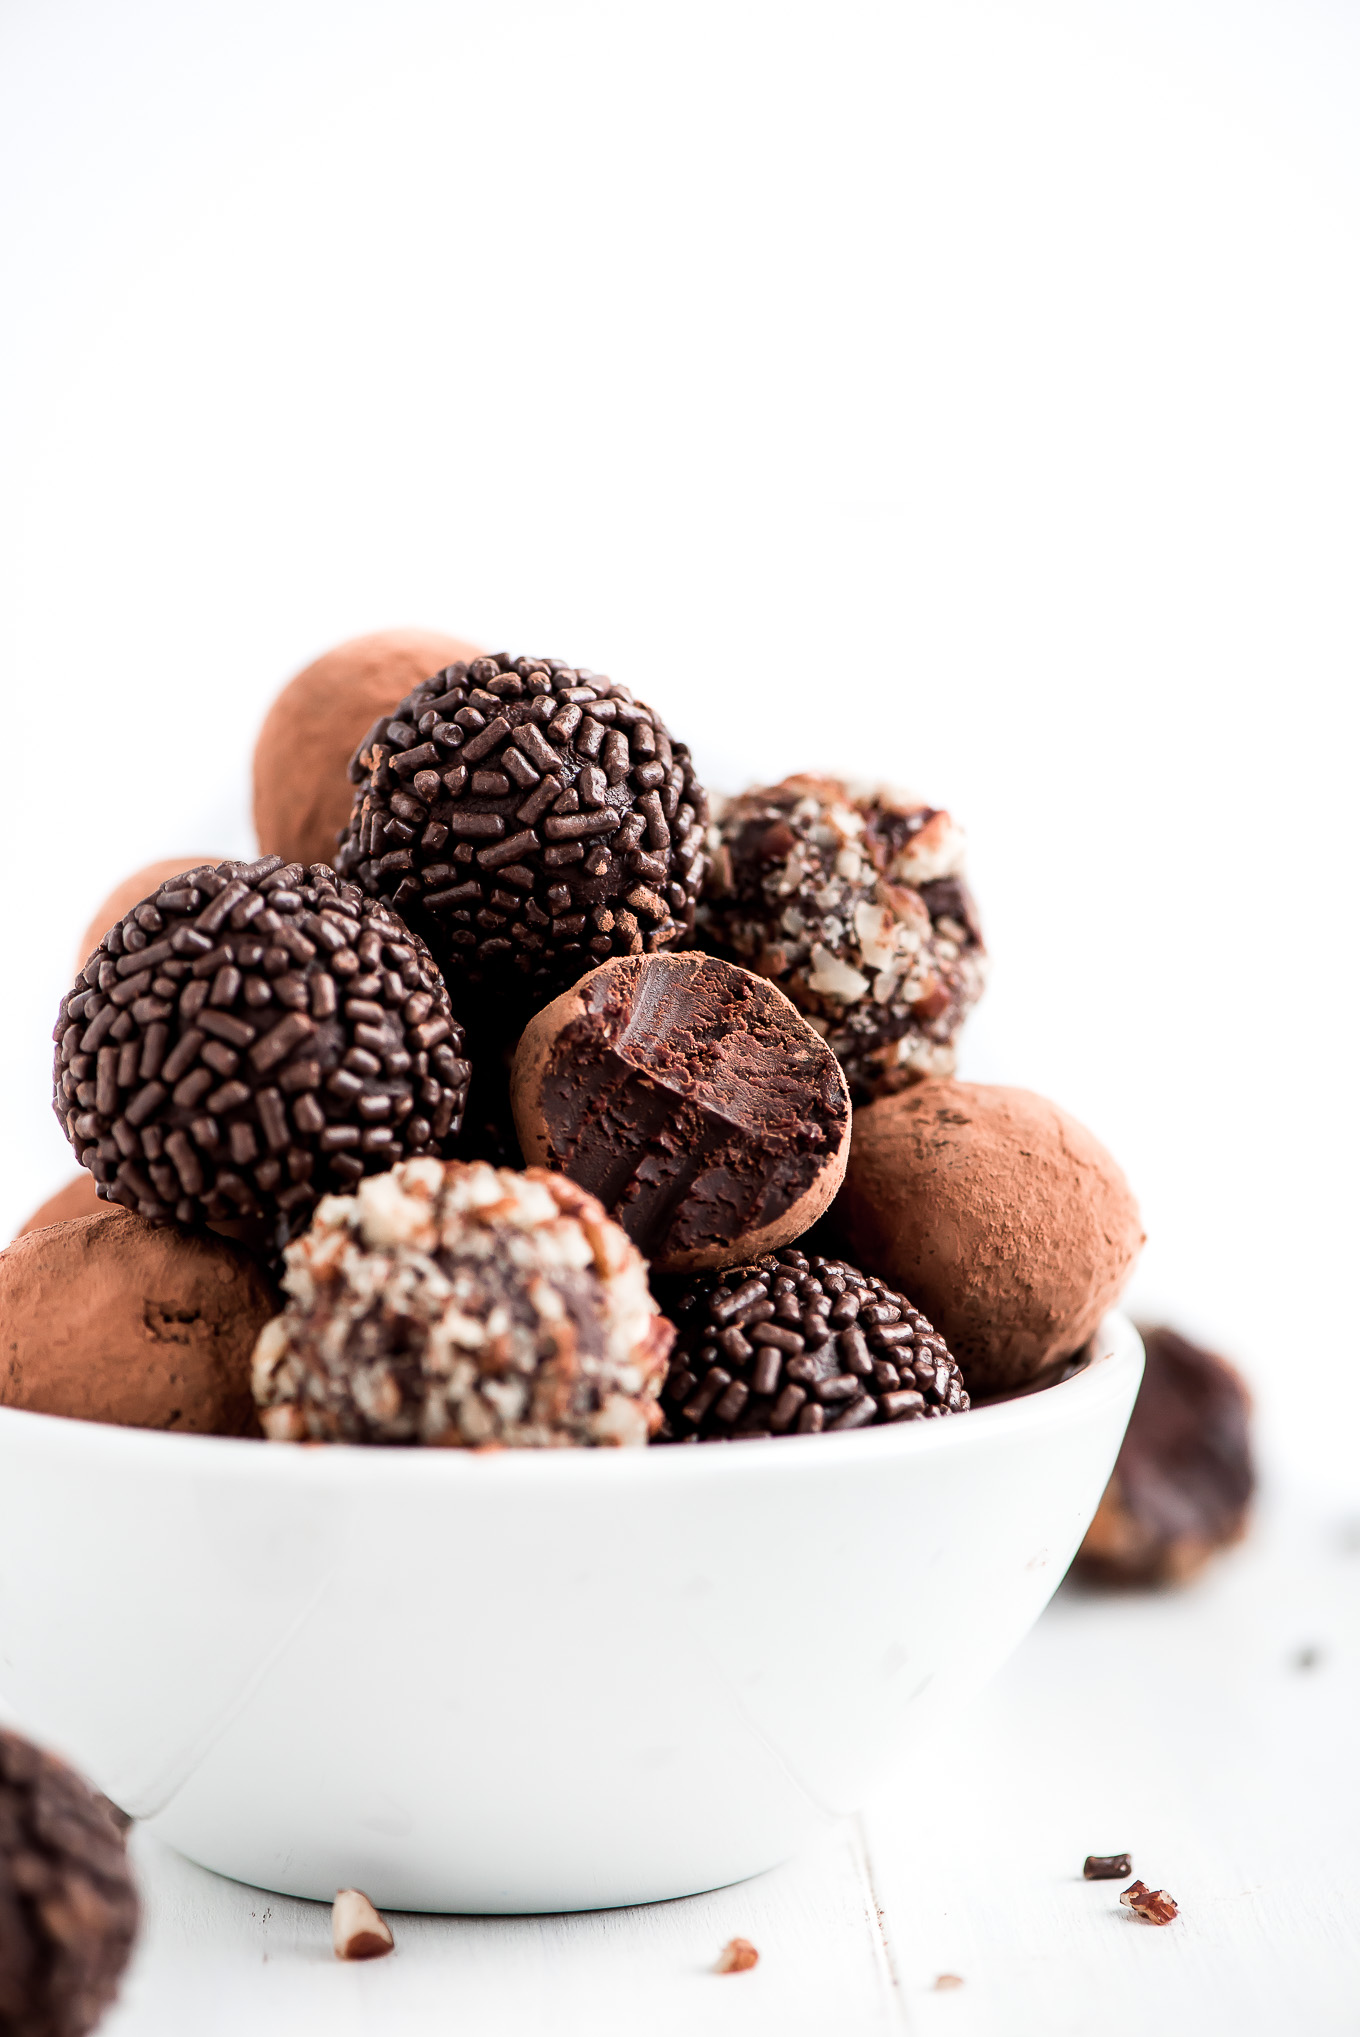 chocolate truffle recipe